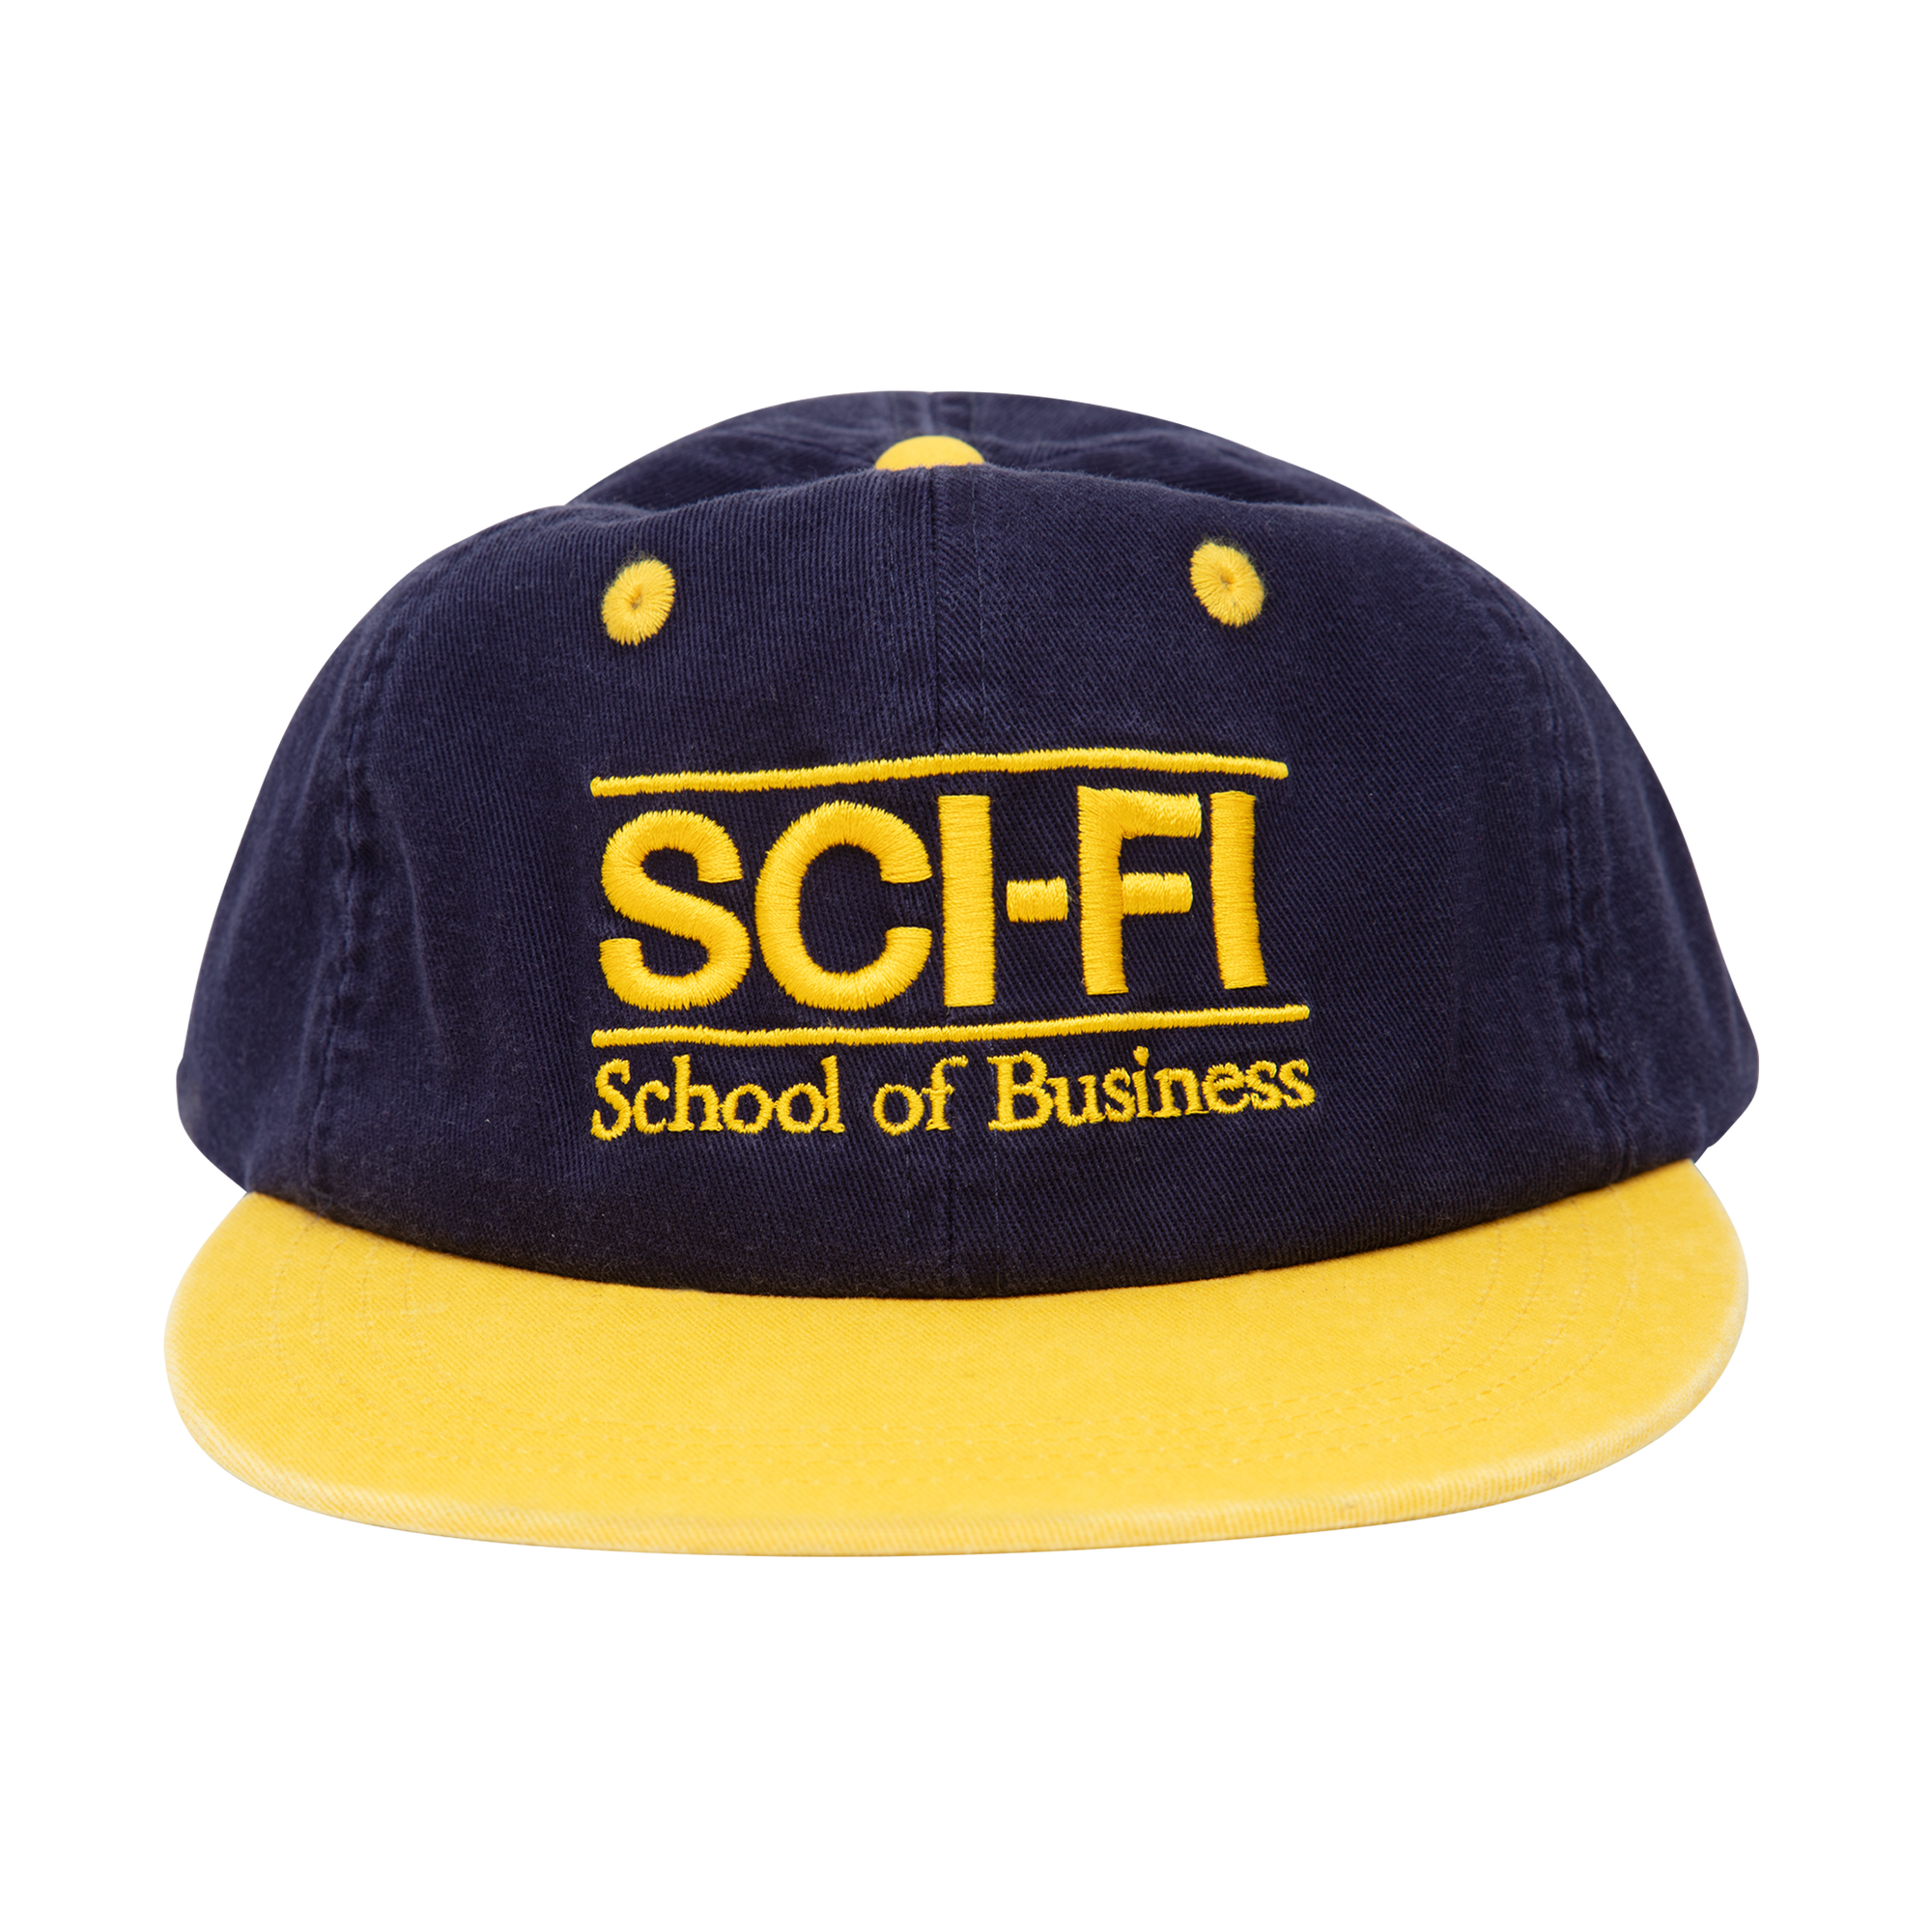 Sci-Fi School Of Business Hat - Navy/Yellow